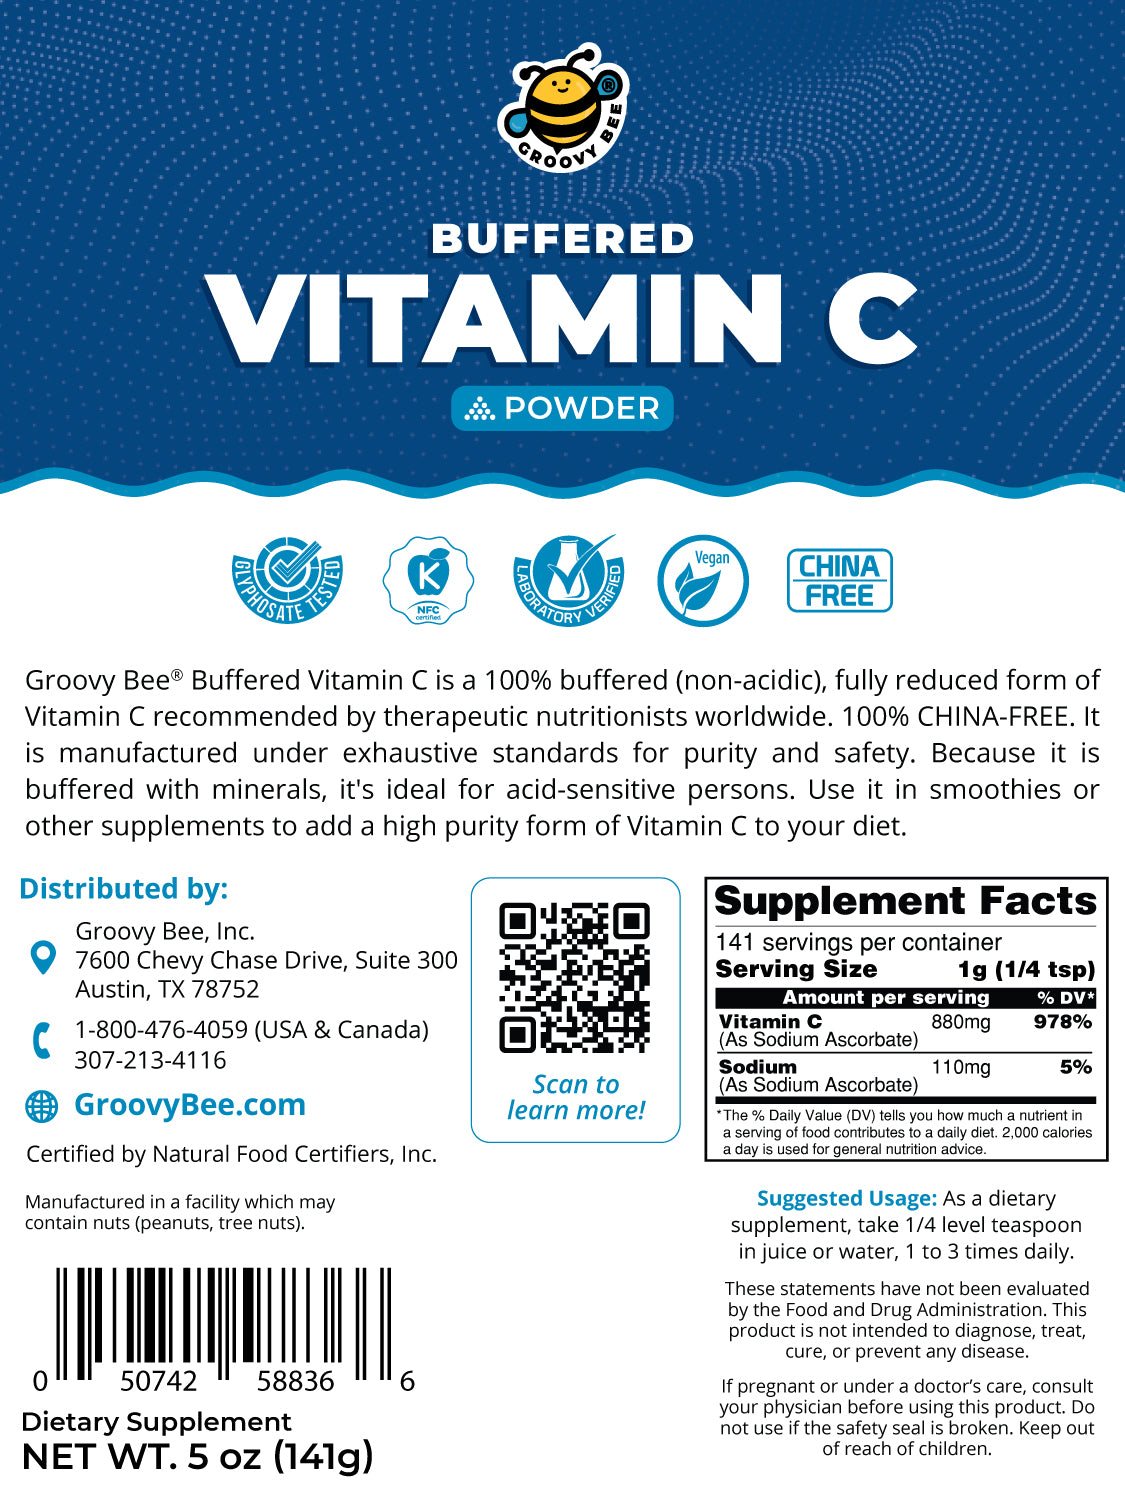 Buffered Vitamin C Powder 5 oz (141g)